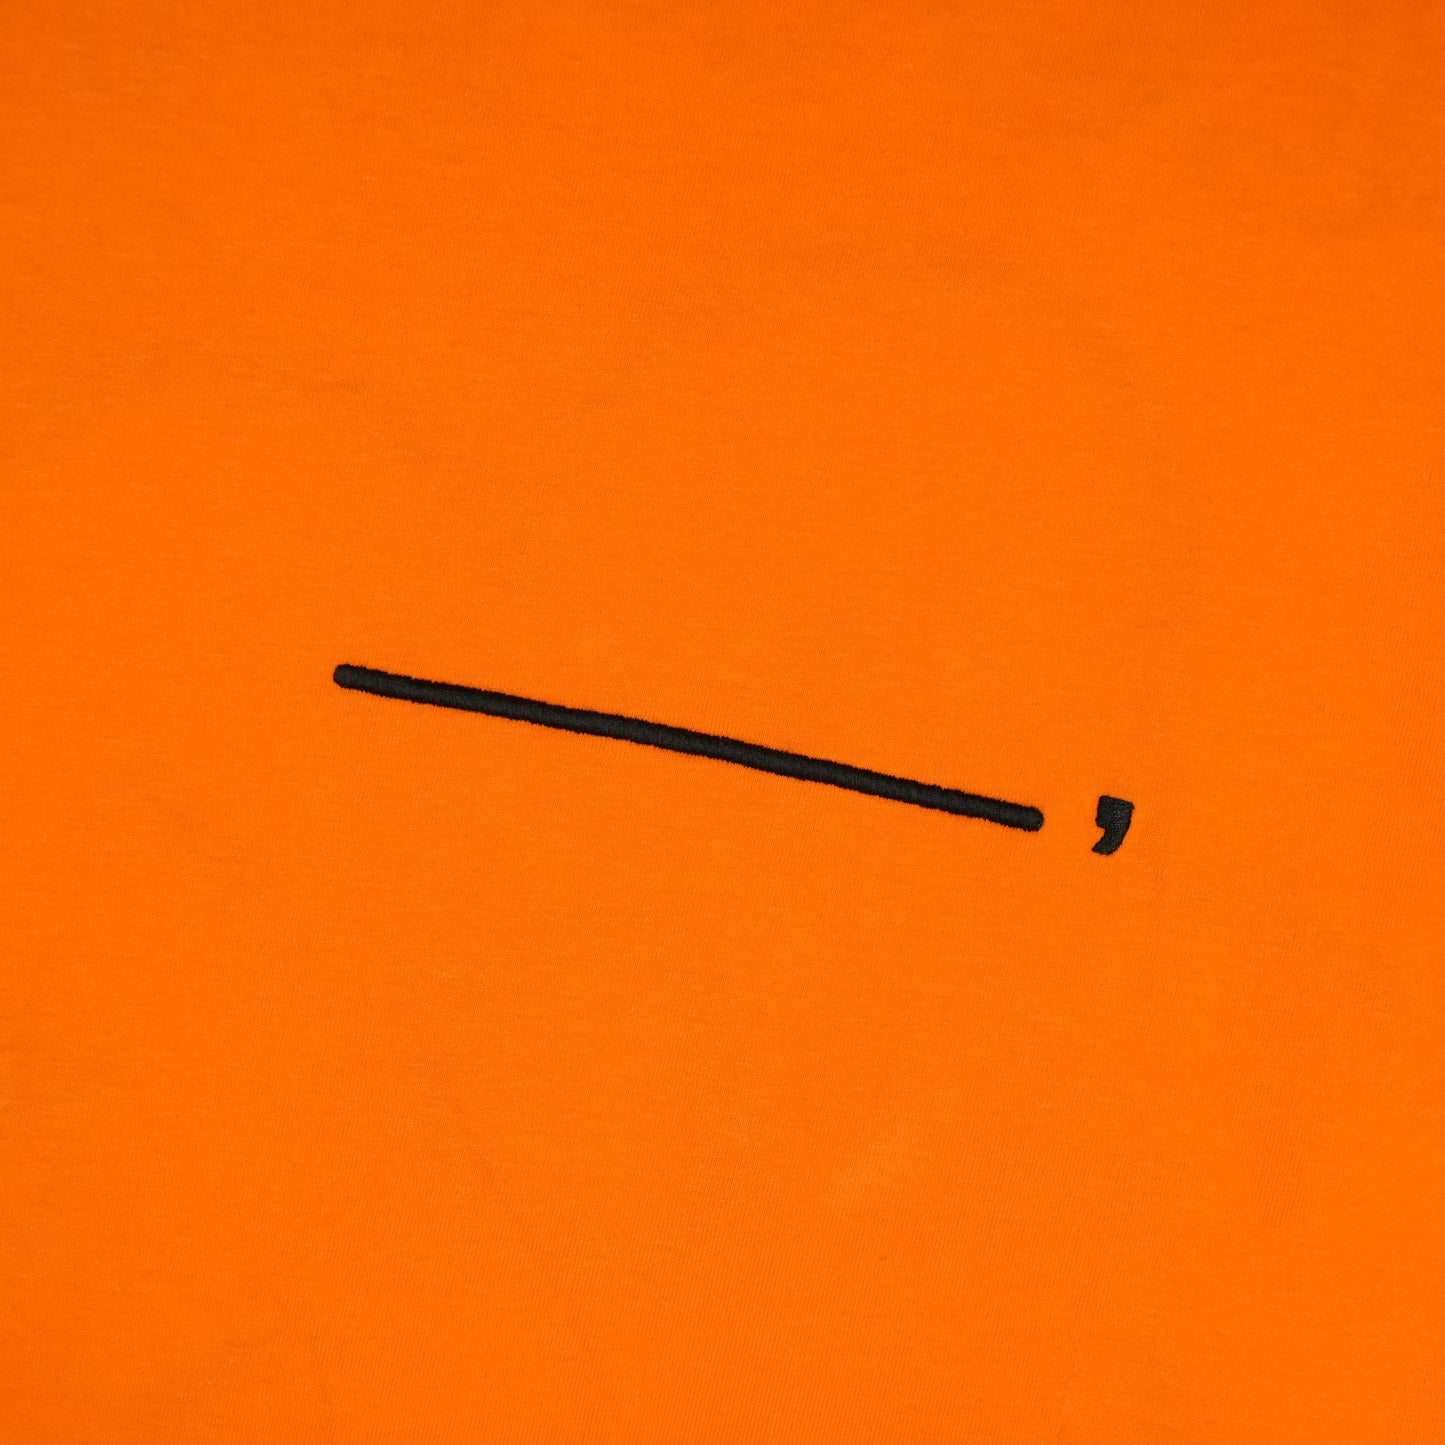 Toson, "Flower" Patchwork T-shirt - Orange